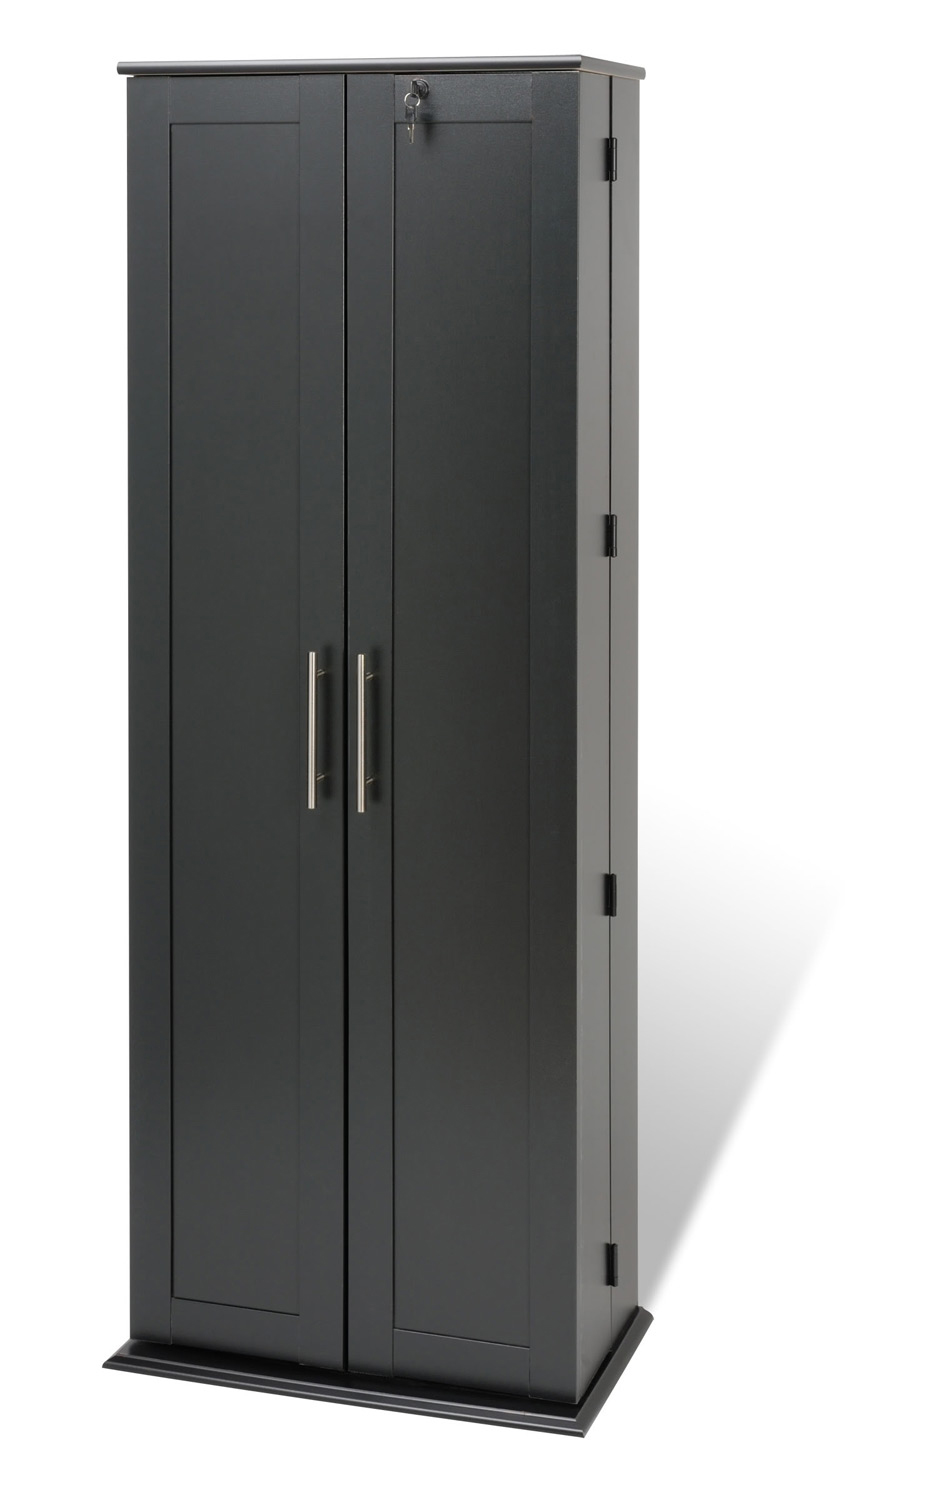 Prepac Grande Locking Media Storage Cabinet with Shaker Doors - Black